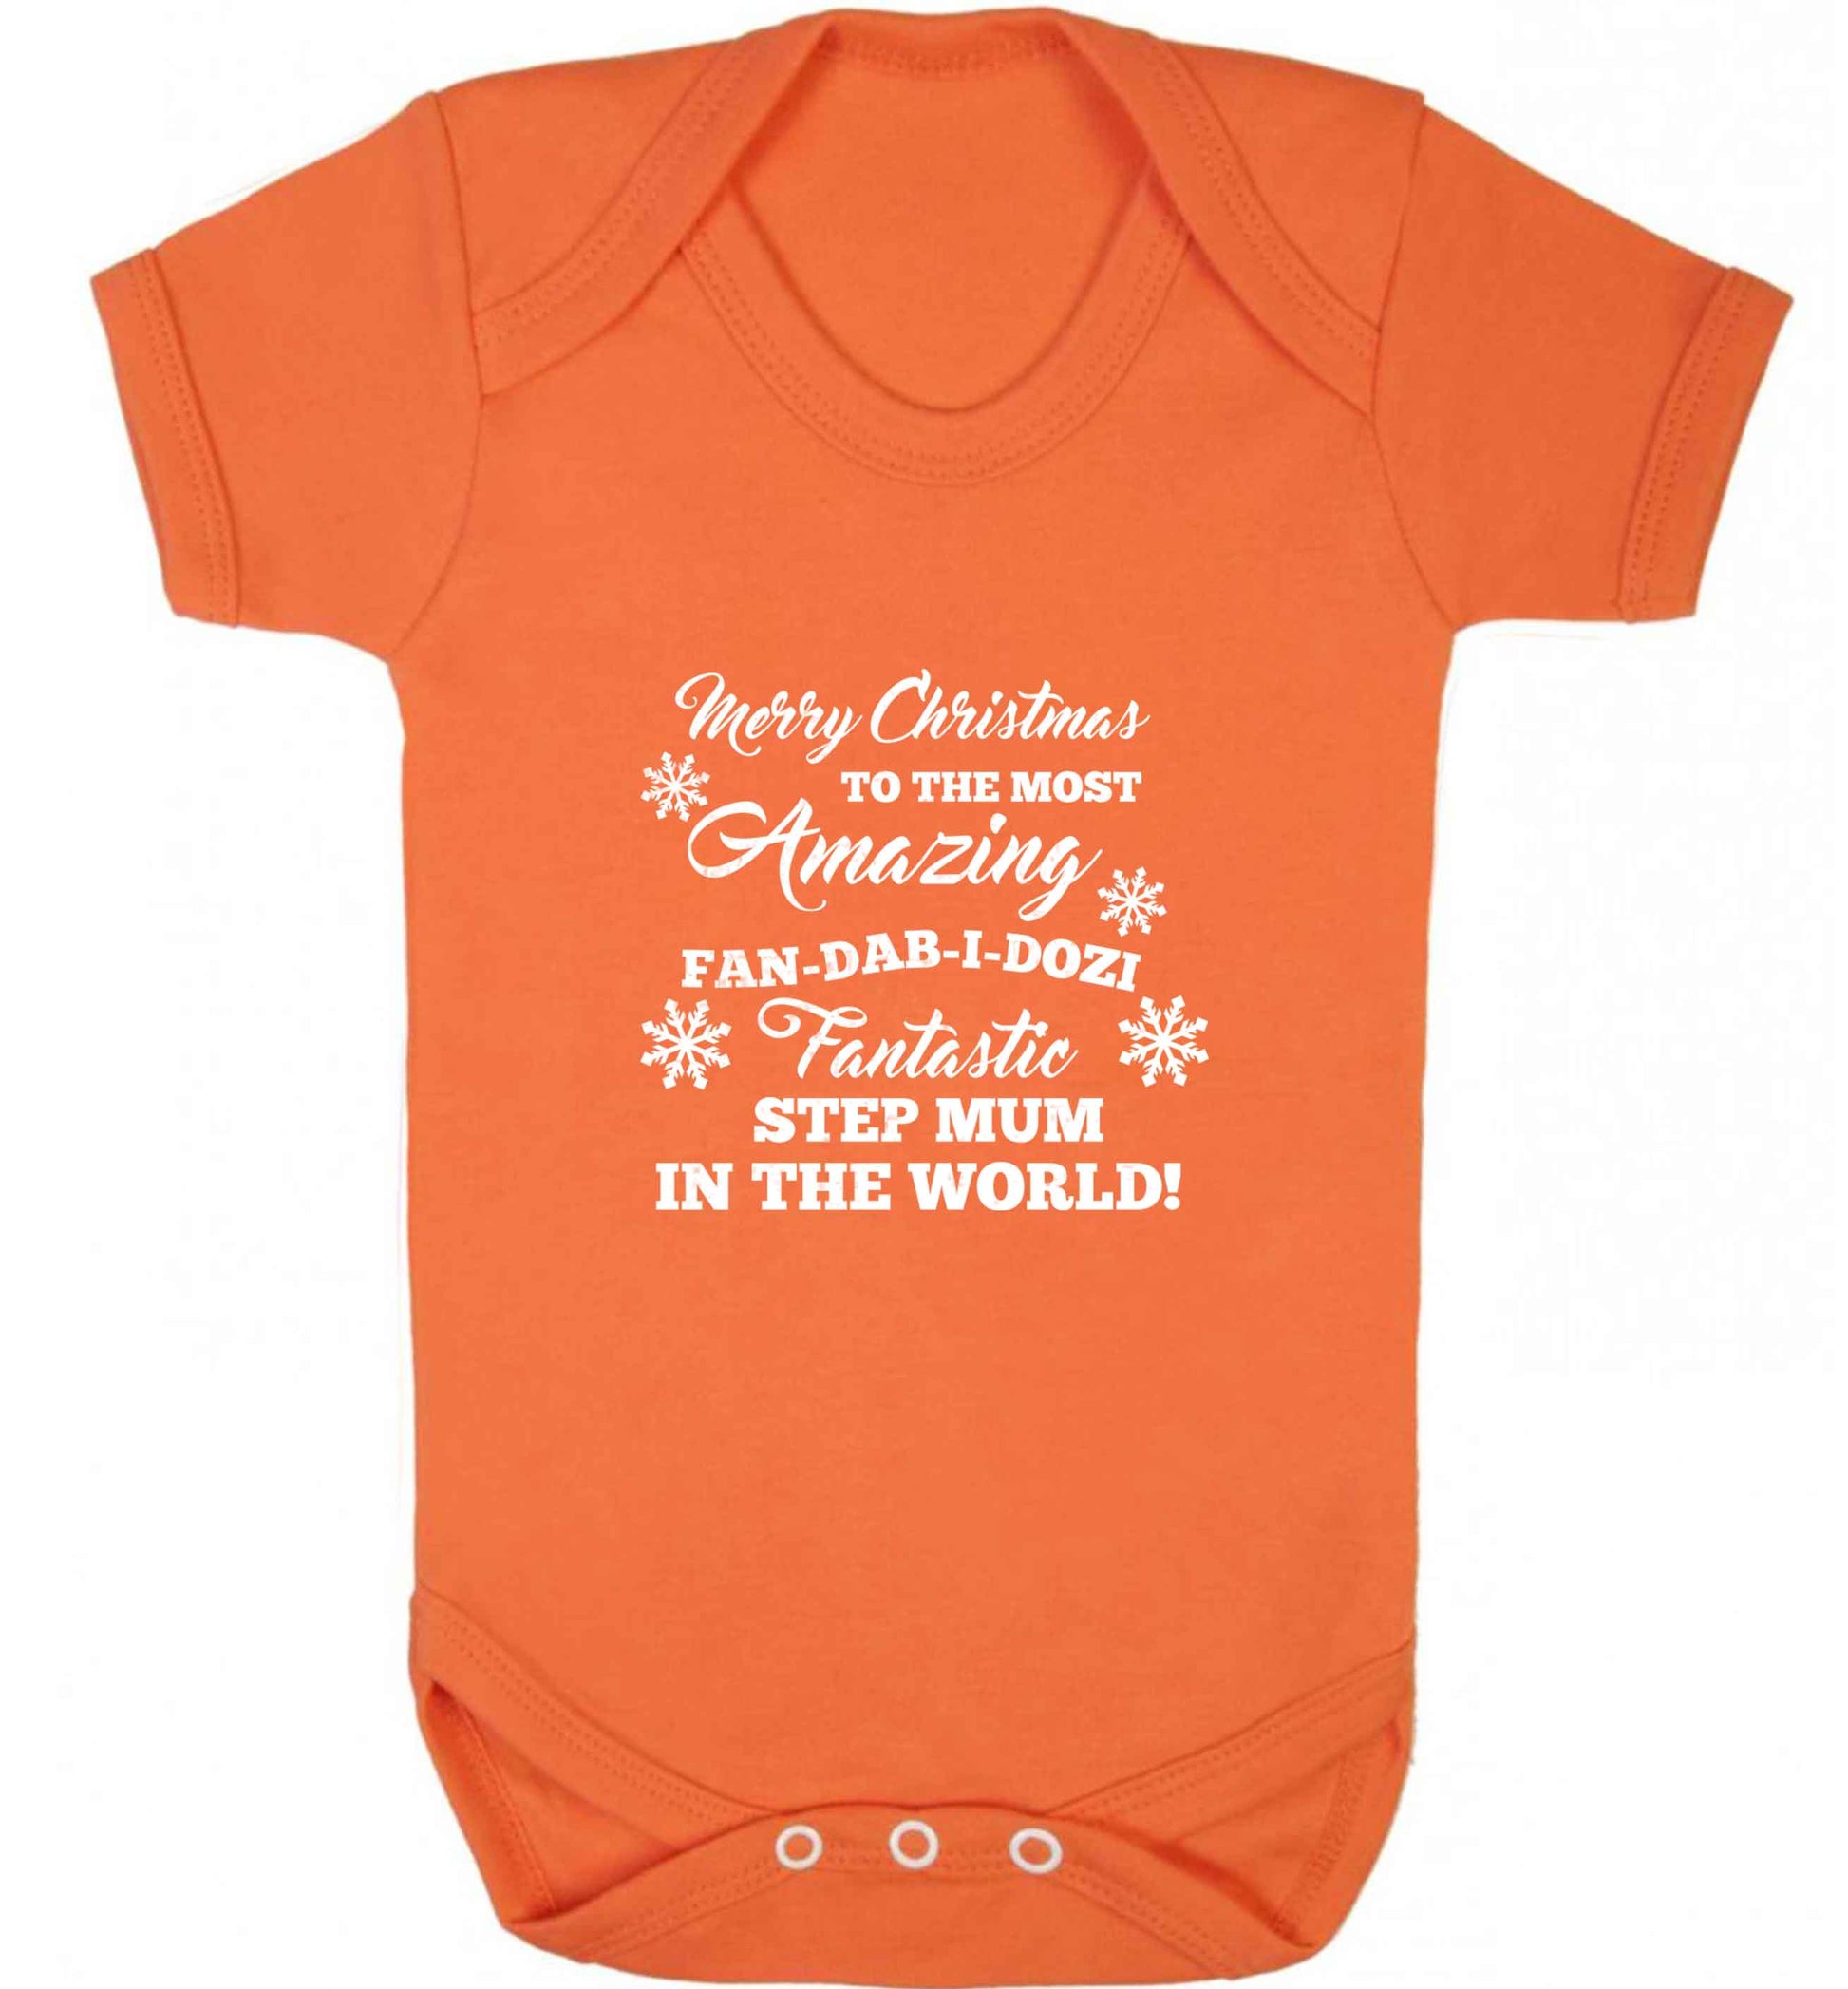 Merry Christmas to the most amazing fan-dab-i-dozi fantasic Step Mum in the world baby vest orange 18-24 months